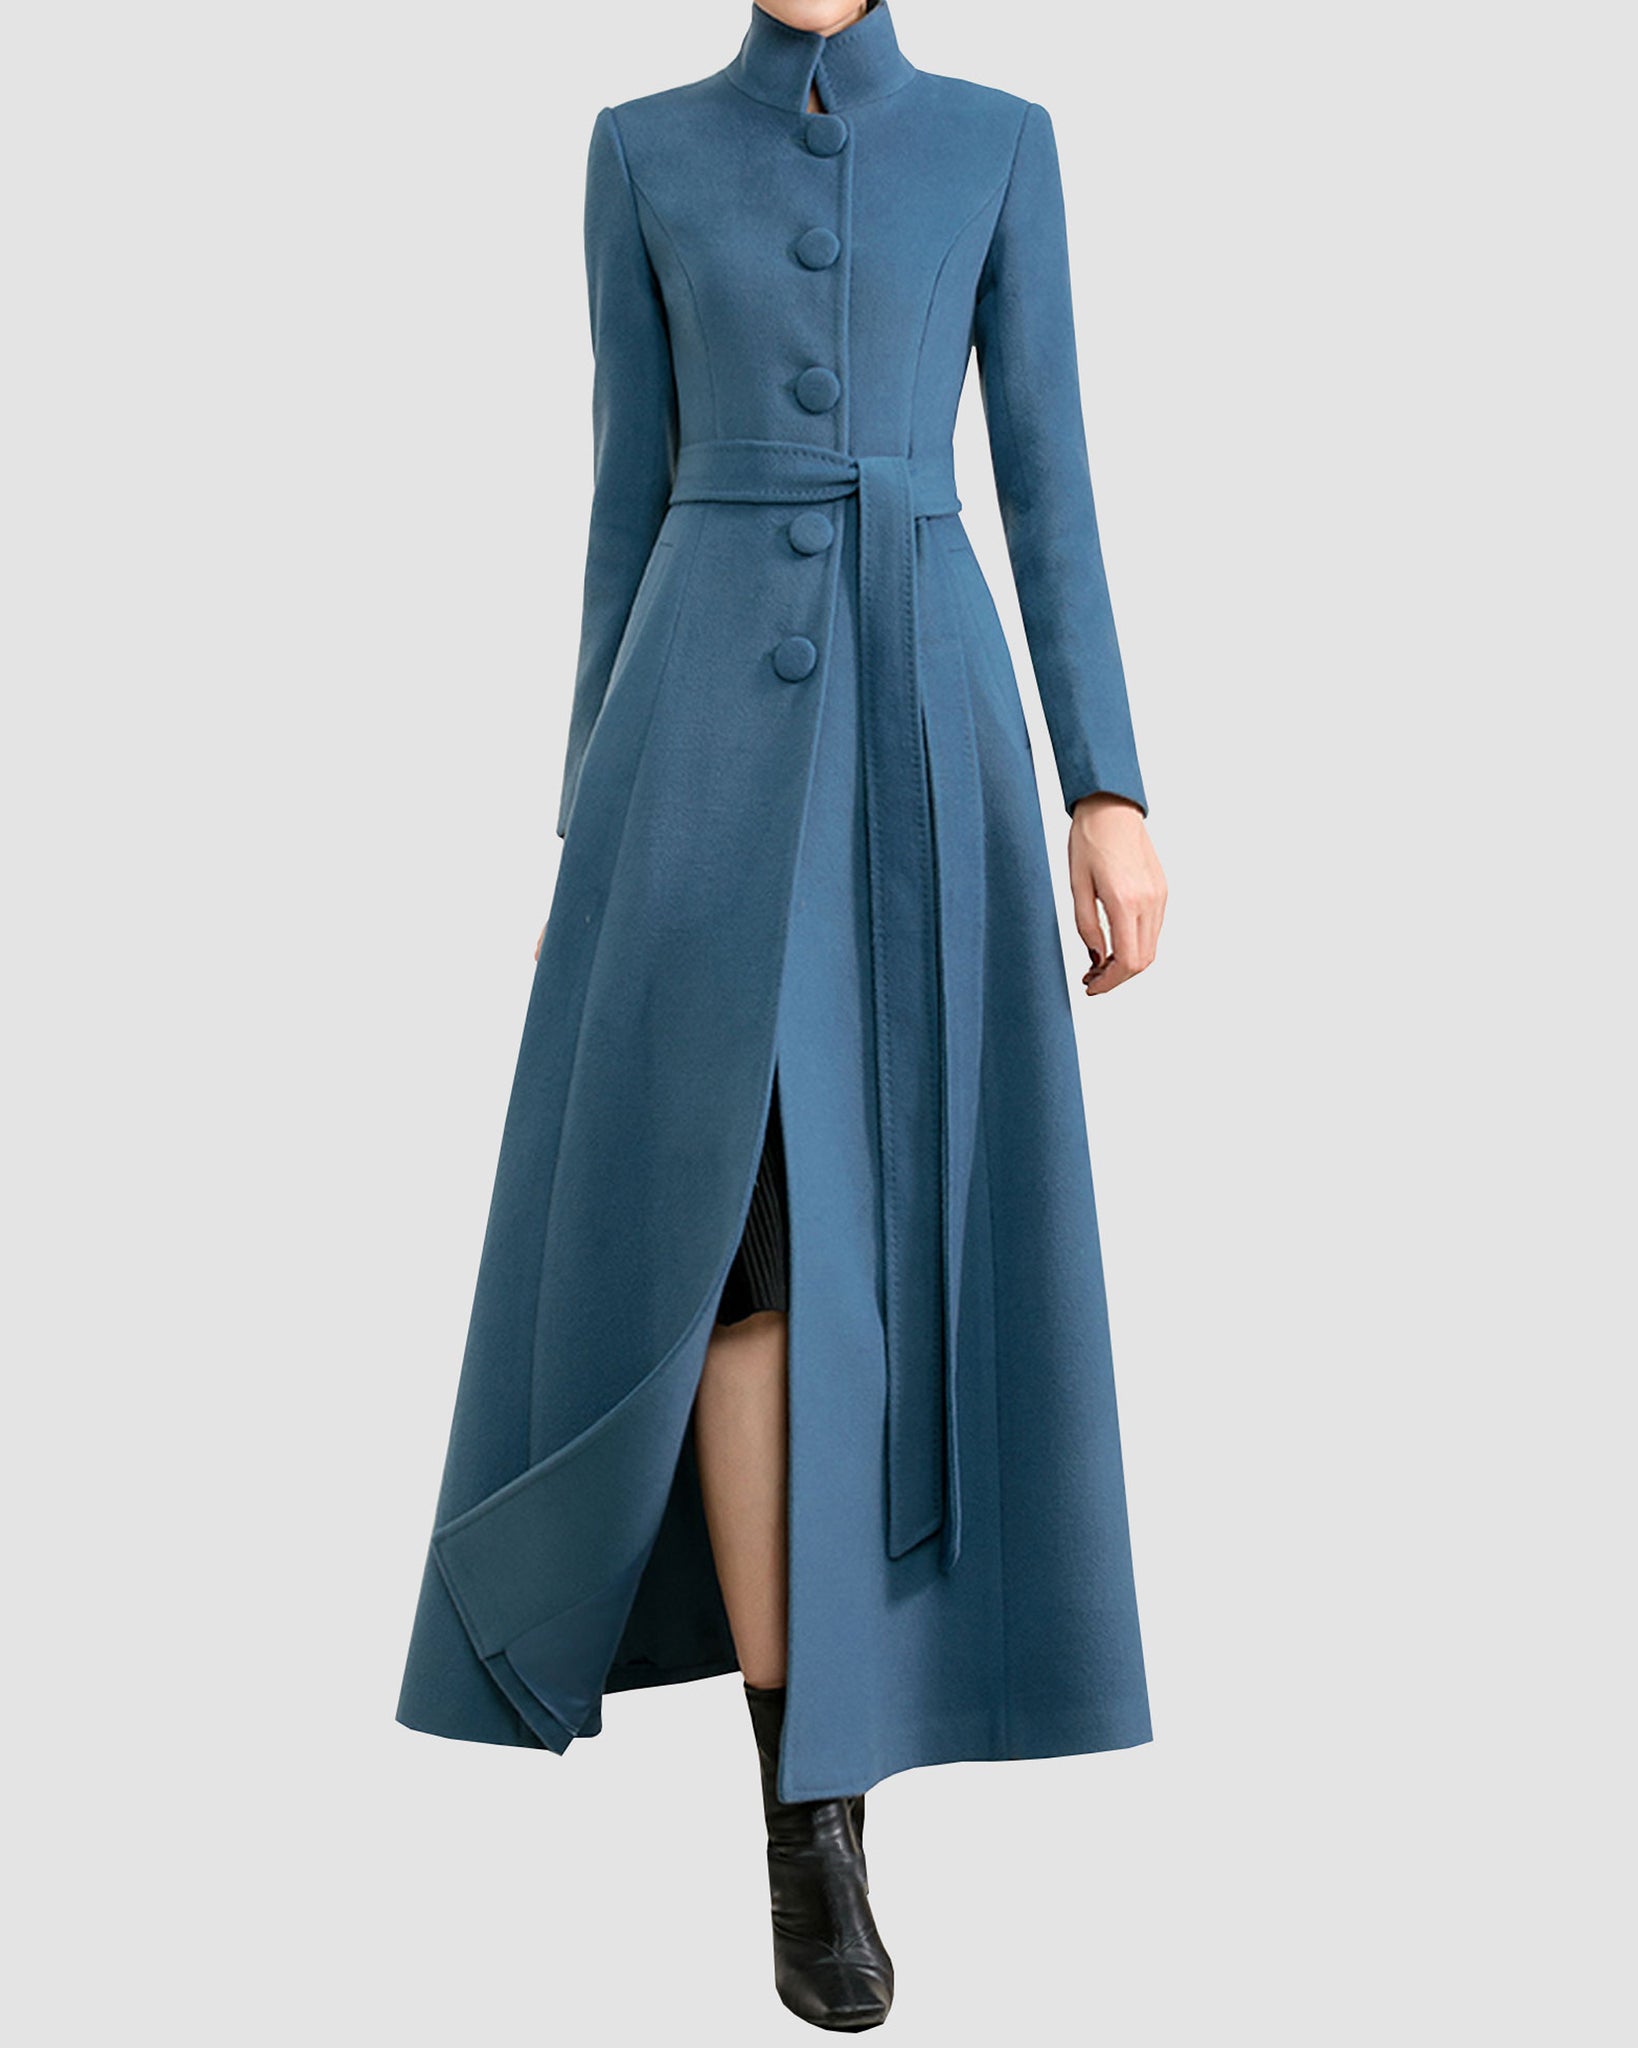 Wool coat women, Cashmere winter coat, long jacket, High collar